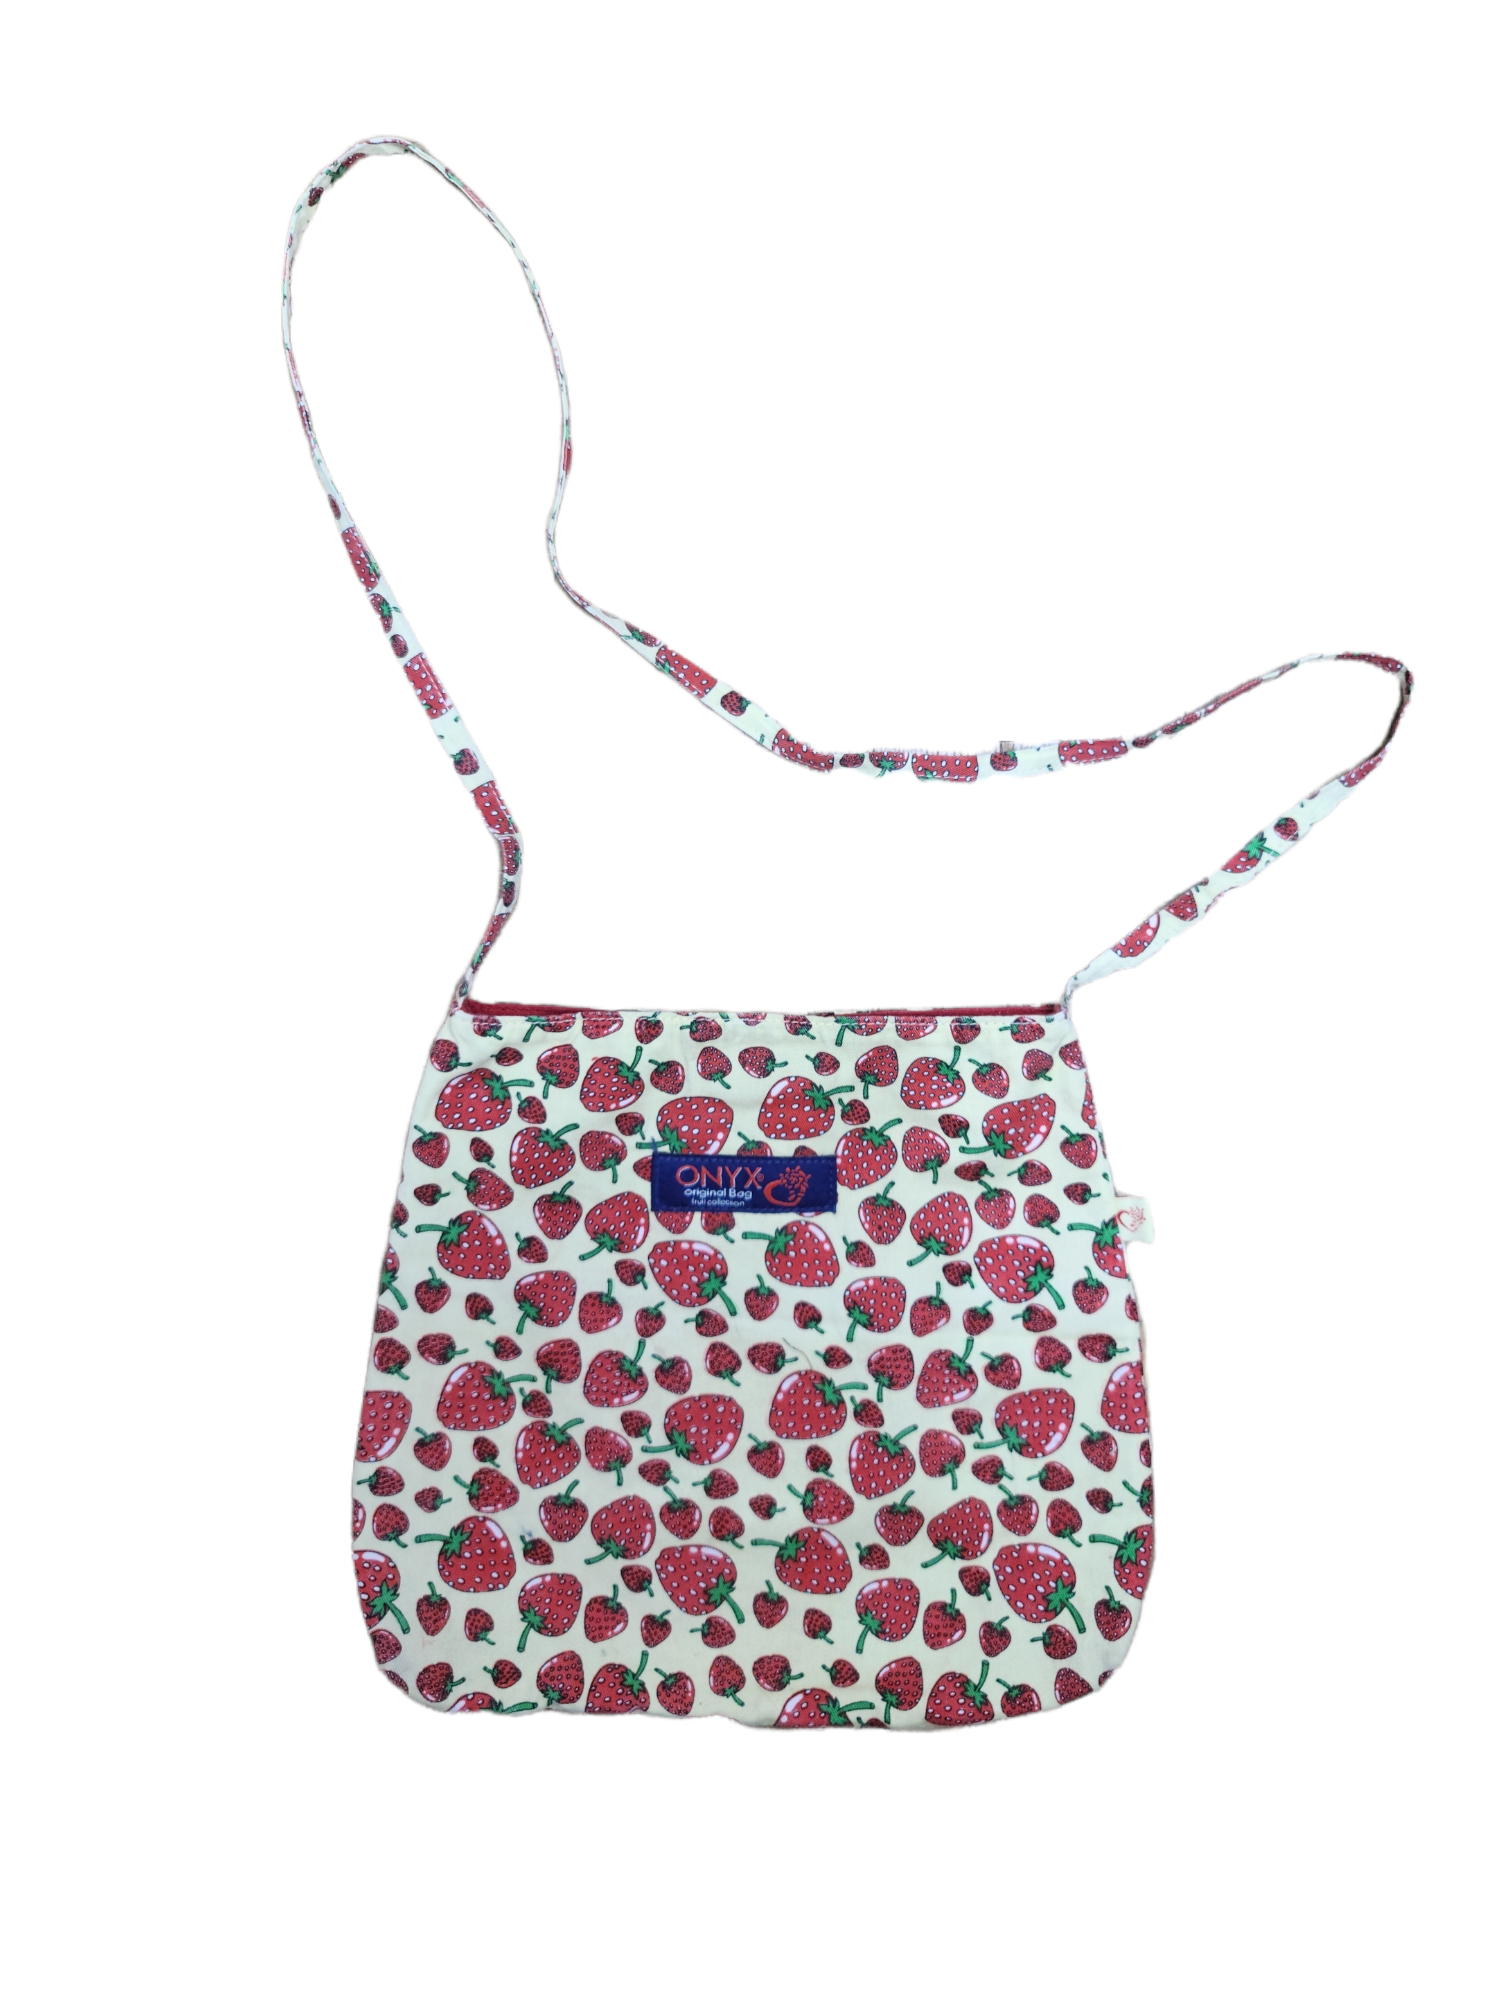 Mini bag 90s vintage cute kawaii printed sac petit bandouliere fraises 